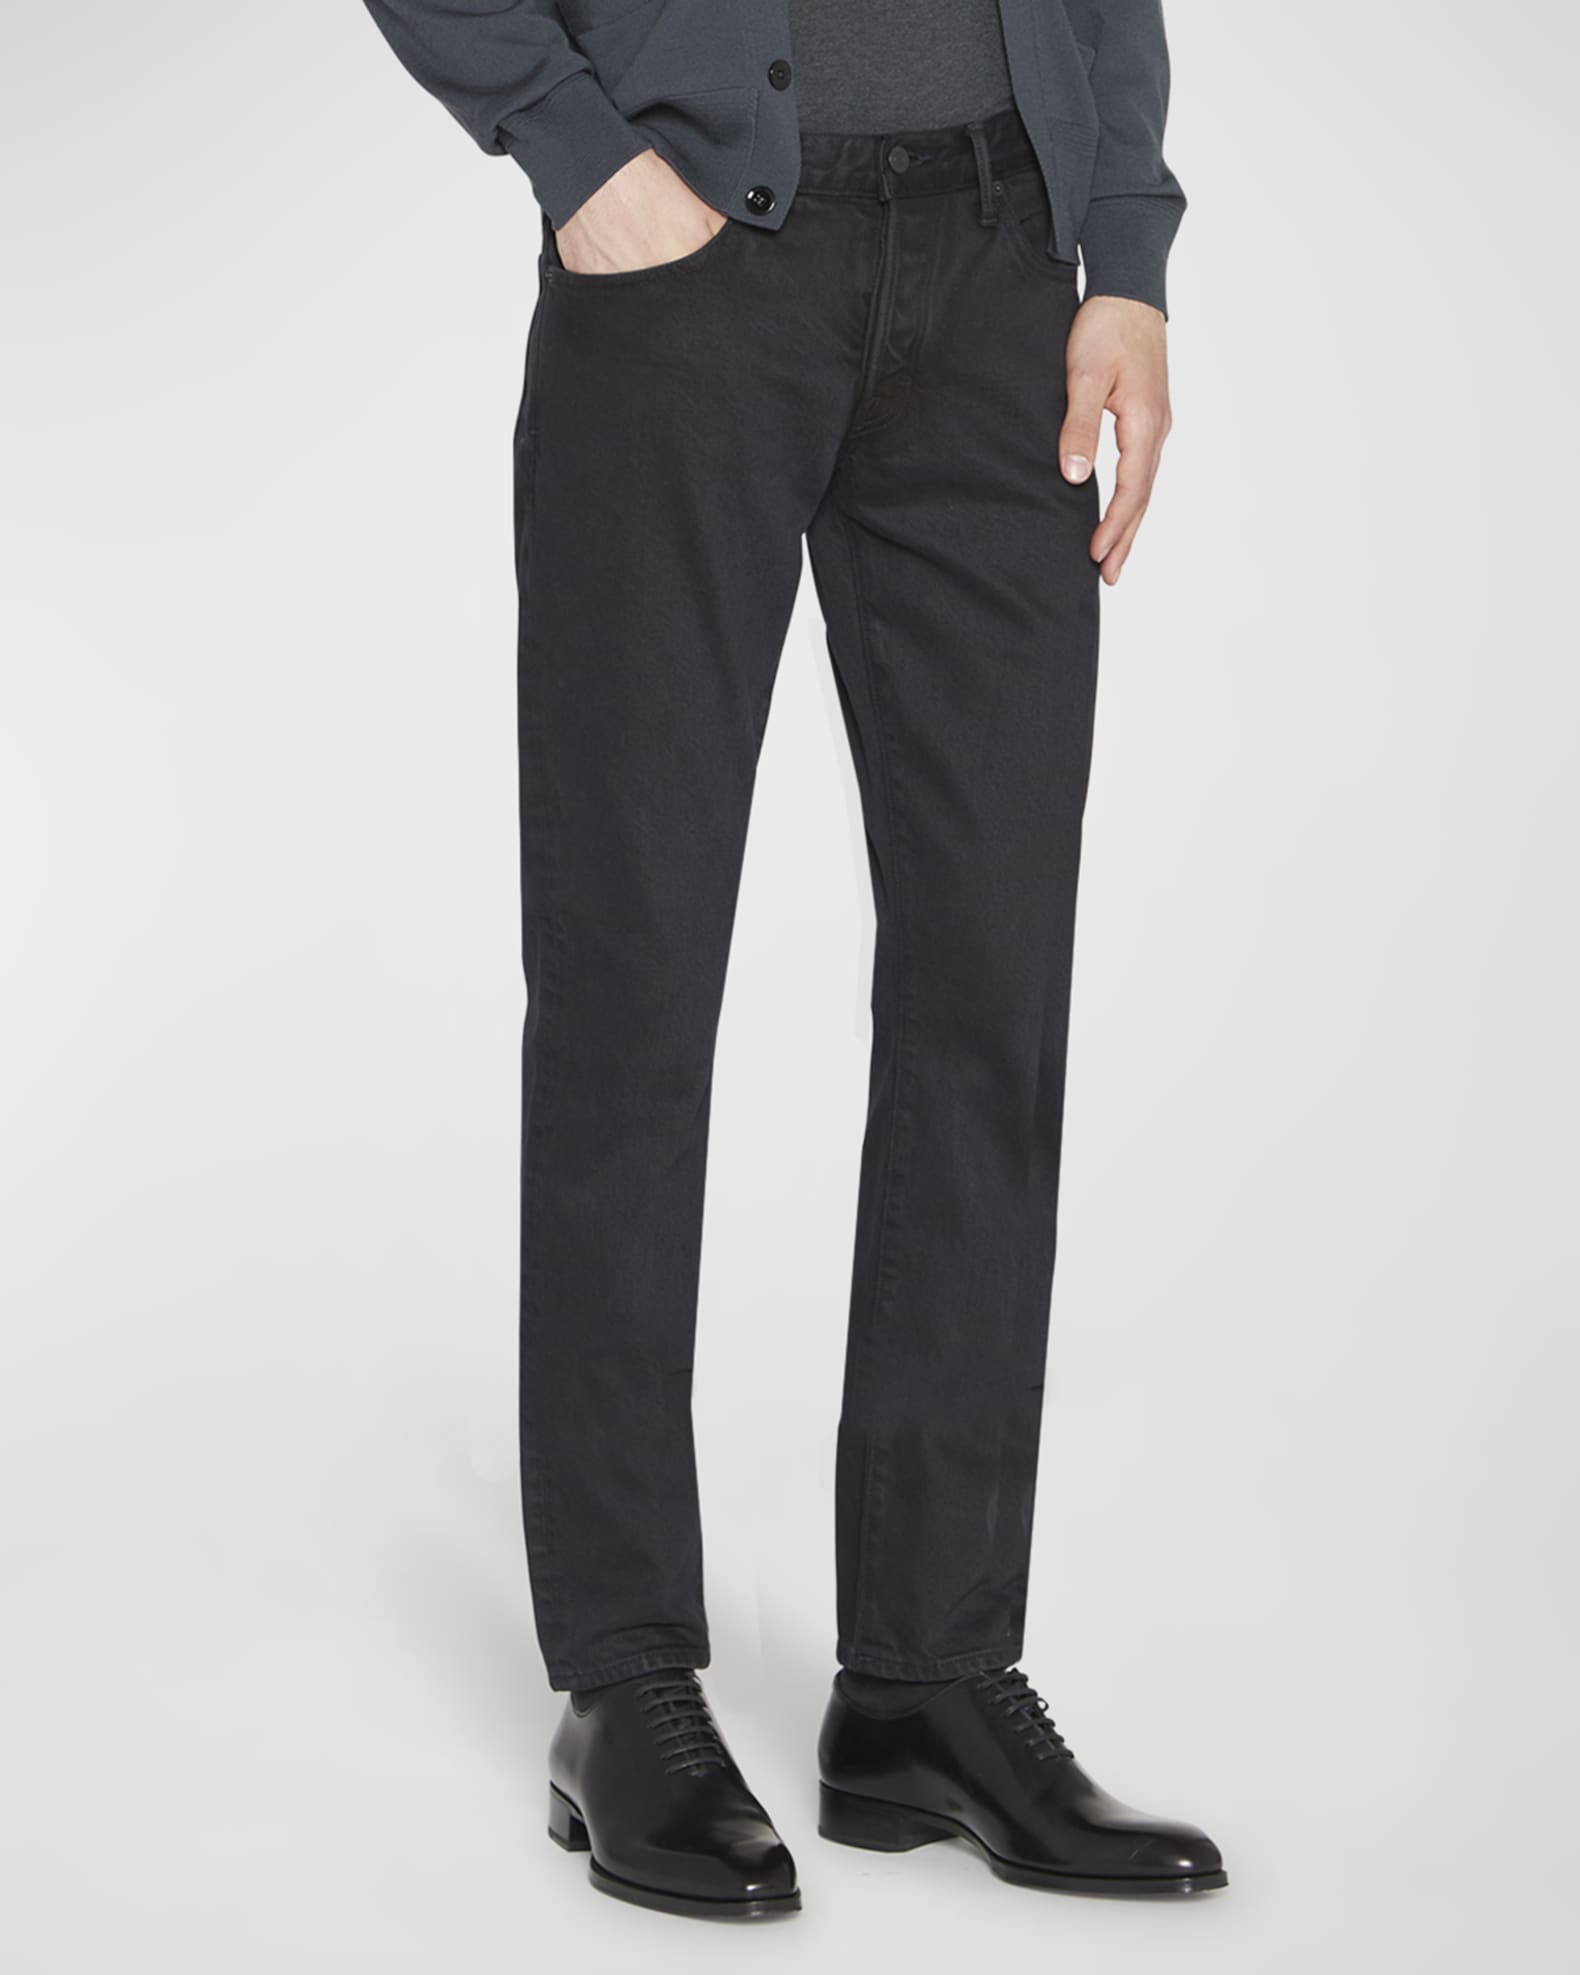 TOM FORD Men's Slim Fit 5-Pocket Jeans | Neiman Marcus